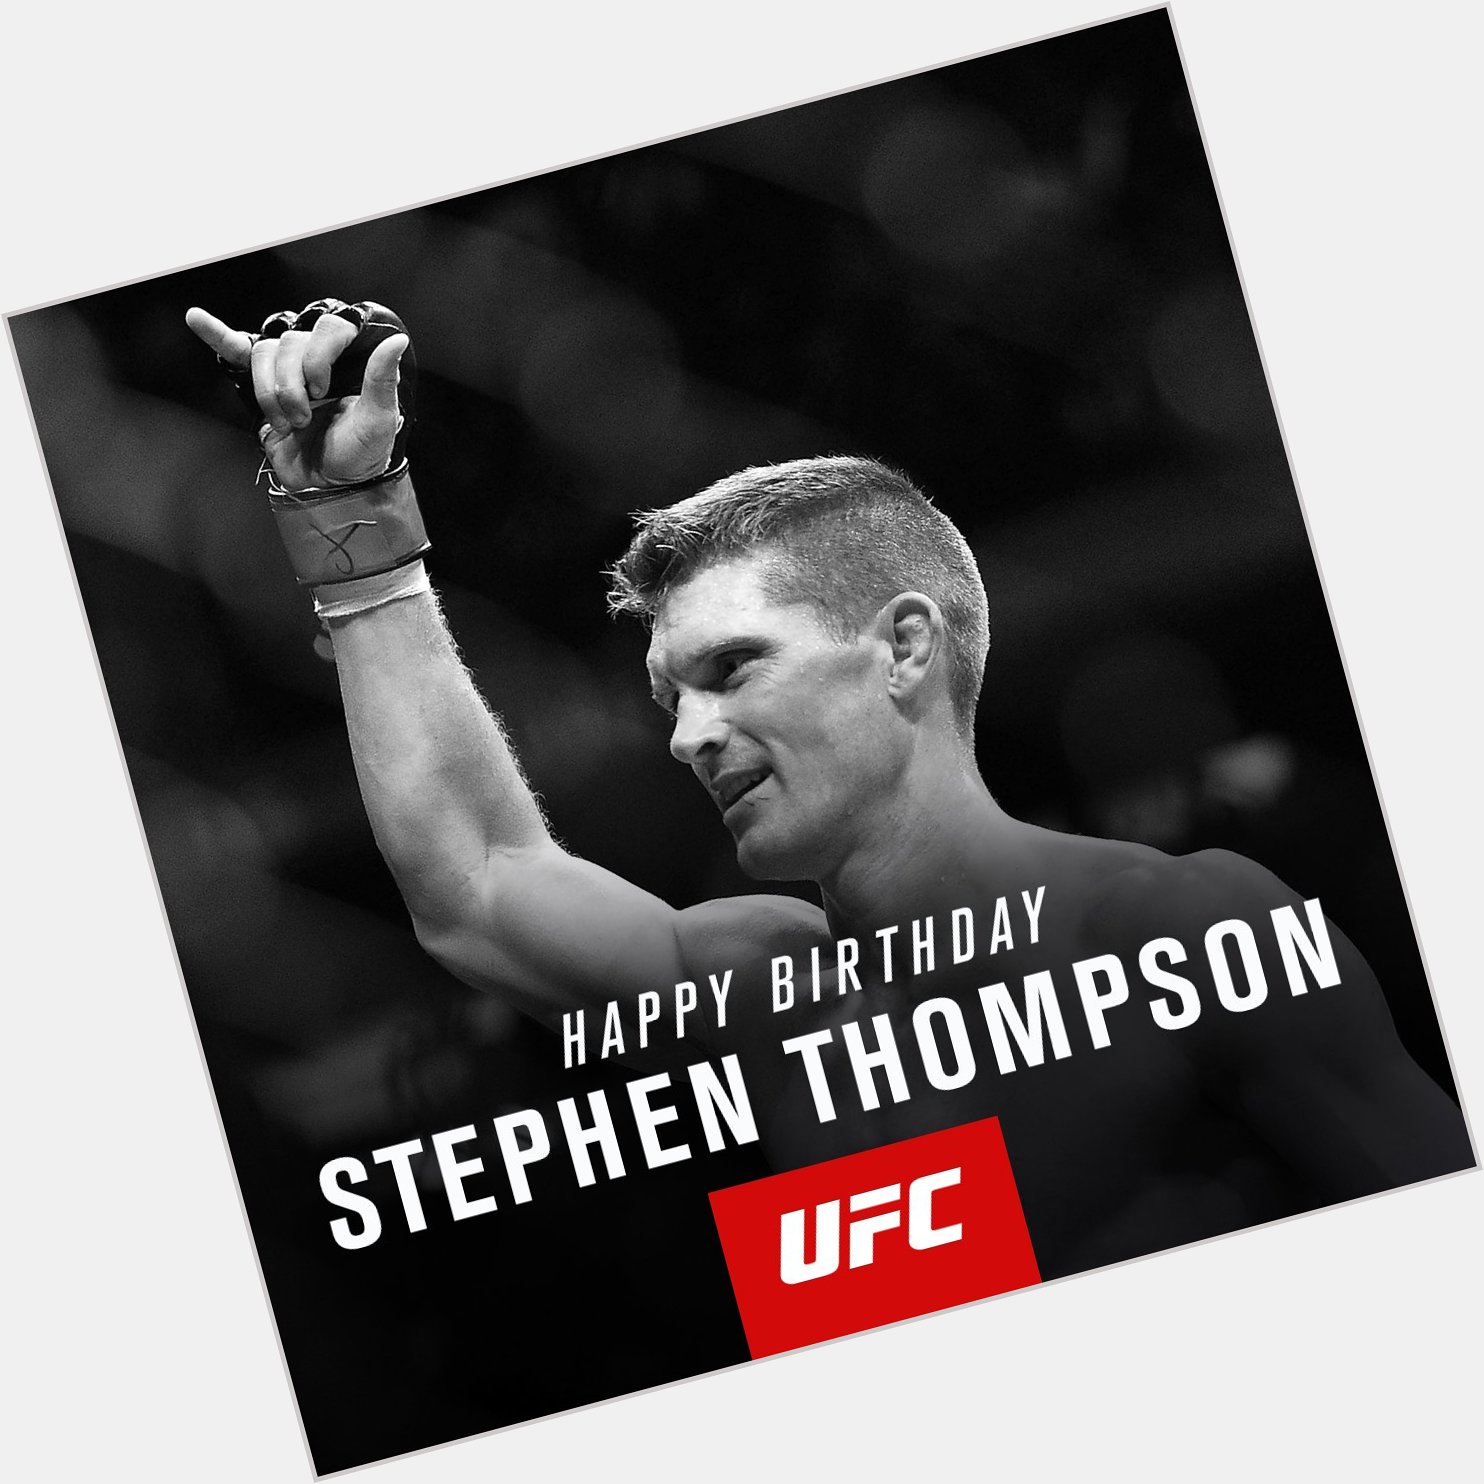 Happy Birthday to Stephen Thompson! 